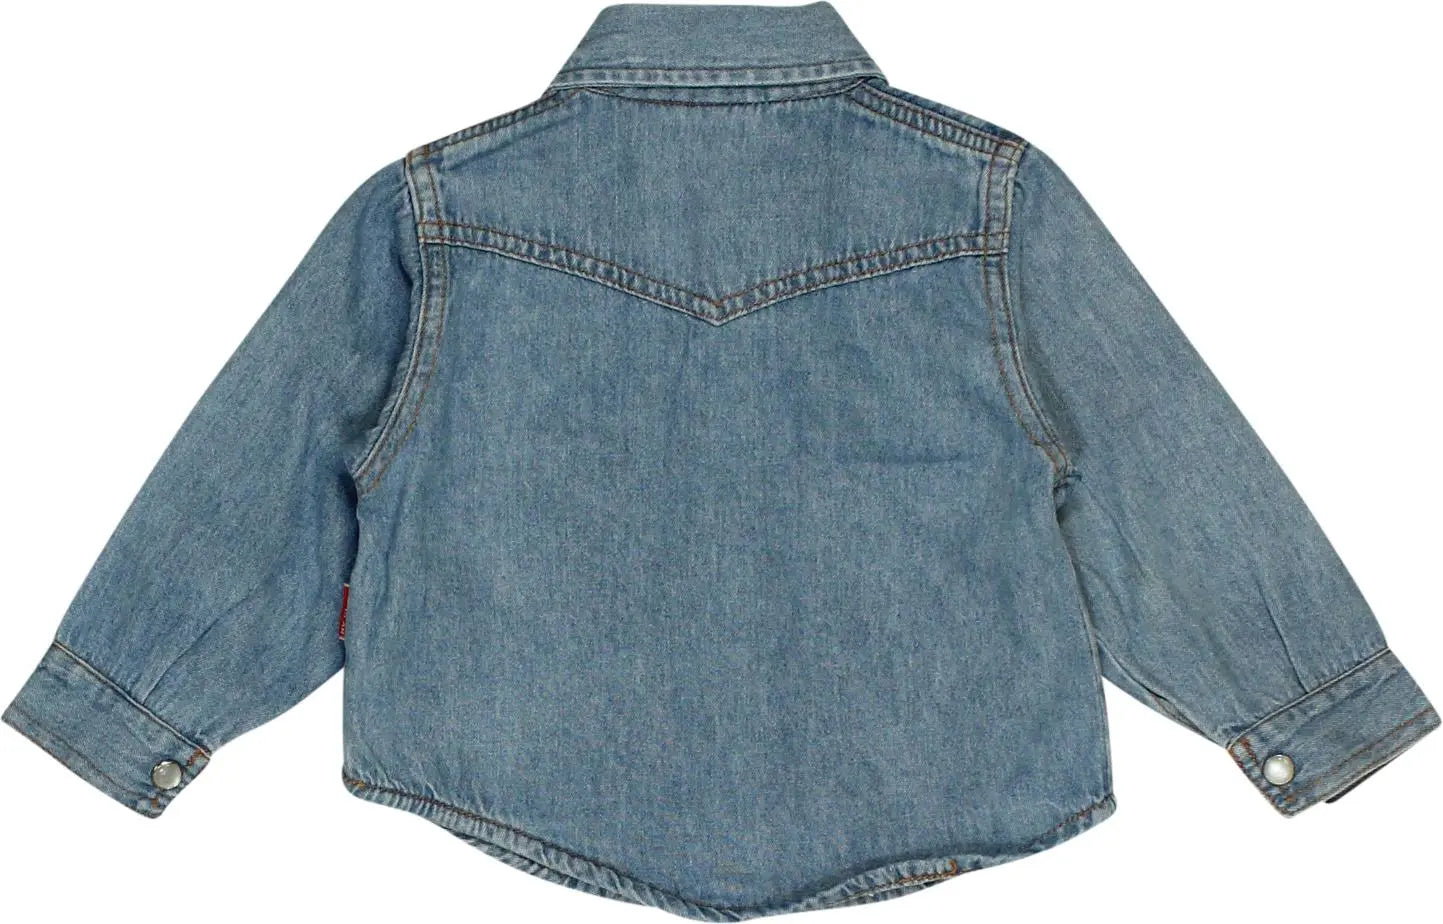 Bo-Dean - Denim Shirt- ThriftTale.com - Vintage and second handclothing